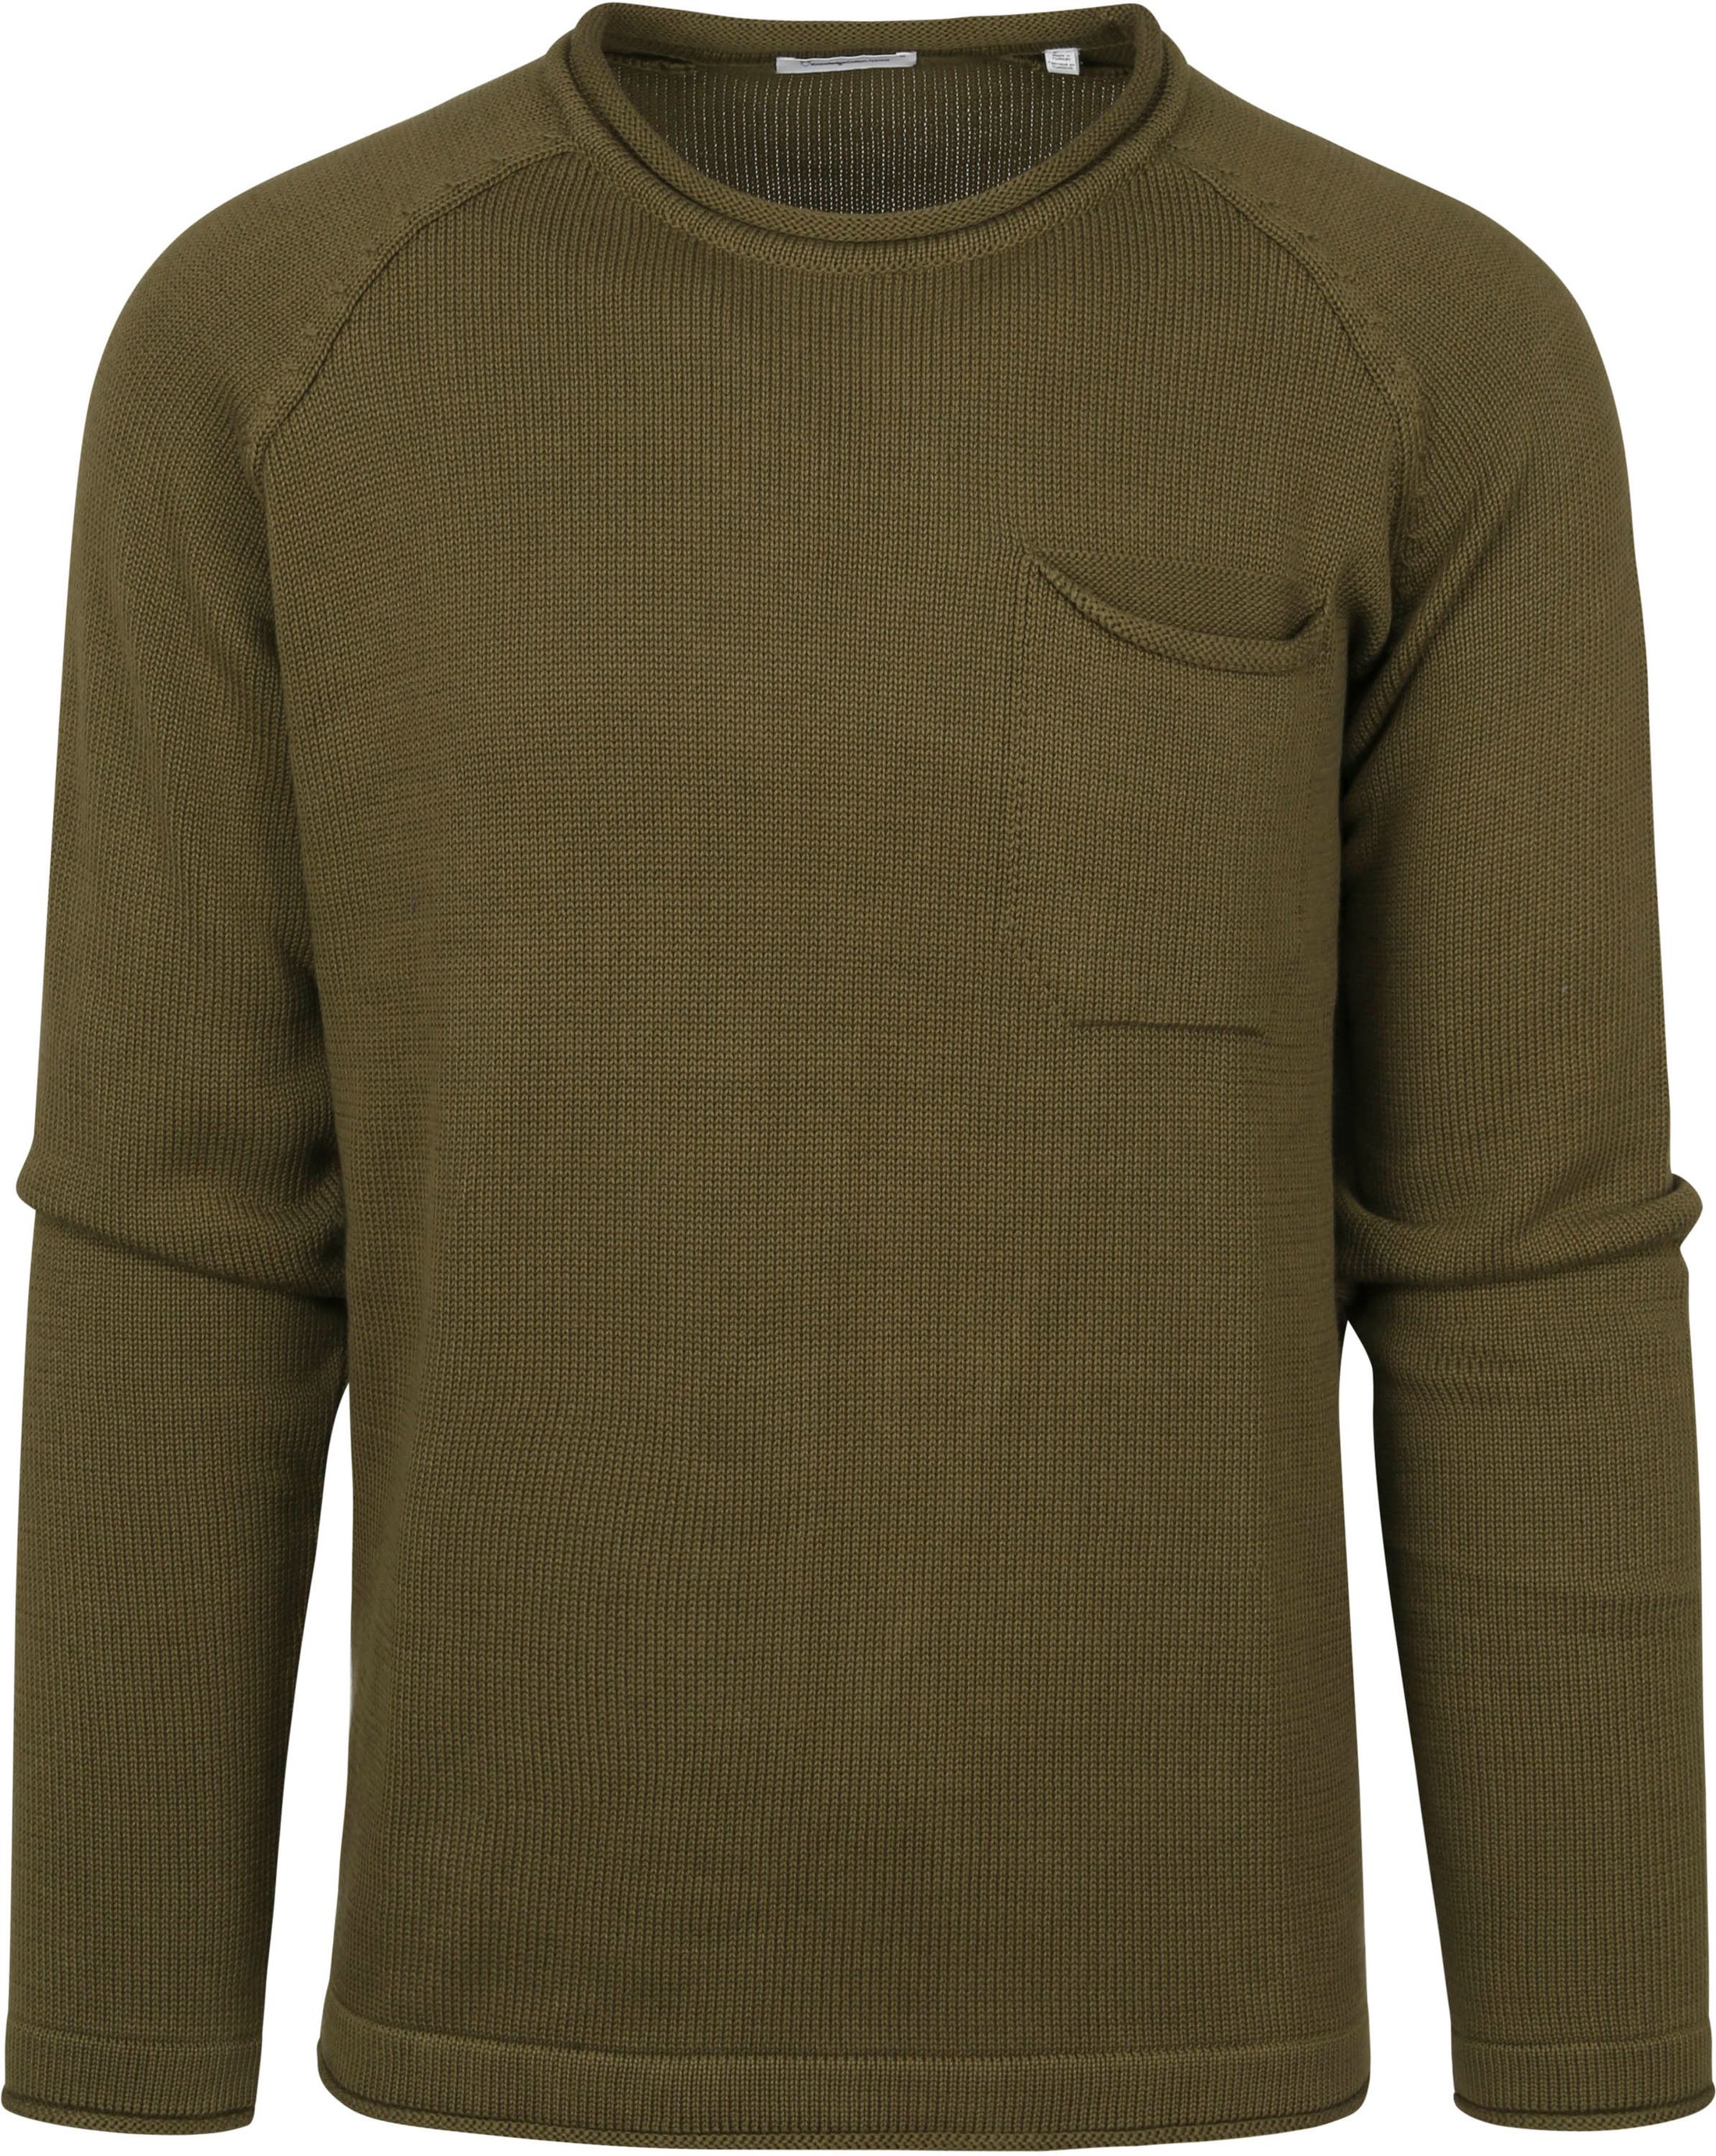 KnowledgeCotton Apparel Sweater Olive Green Dark Green size L